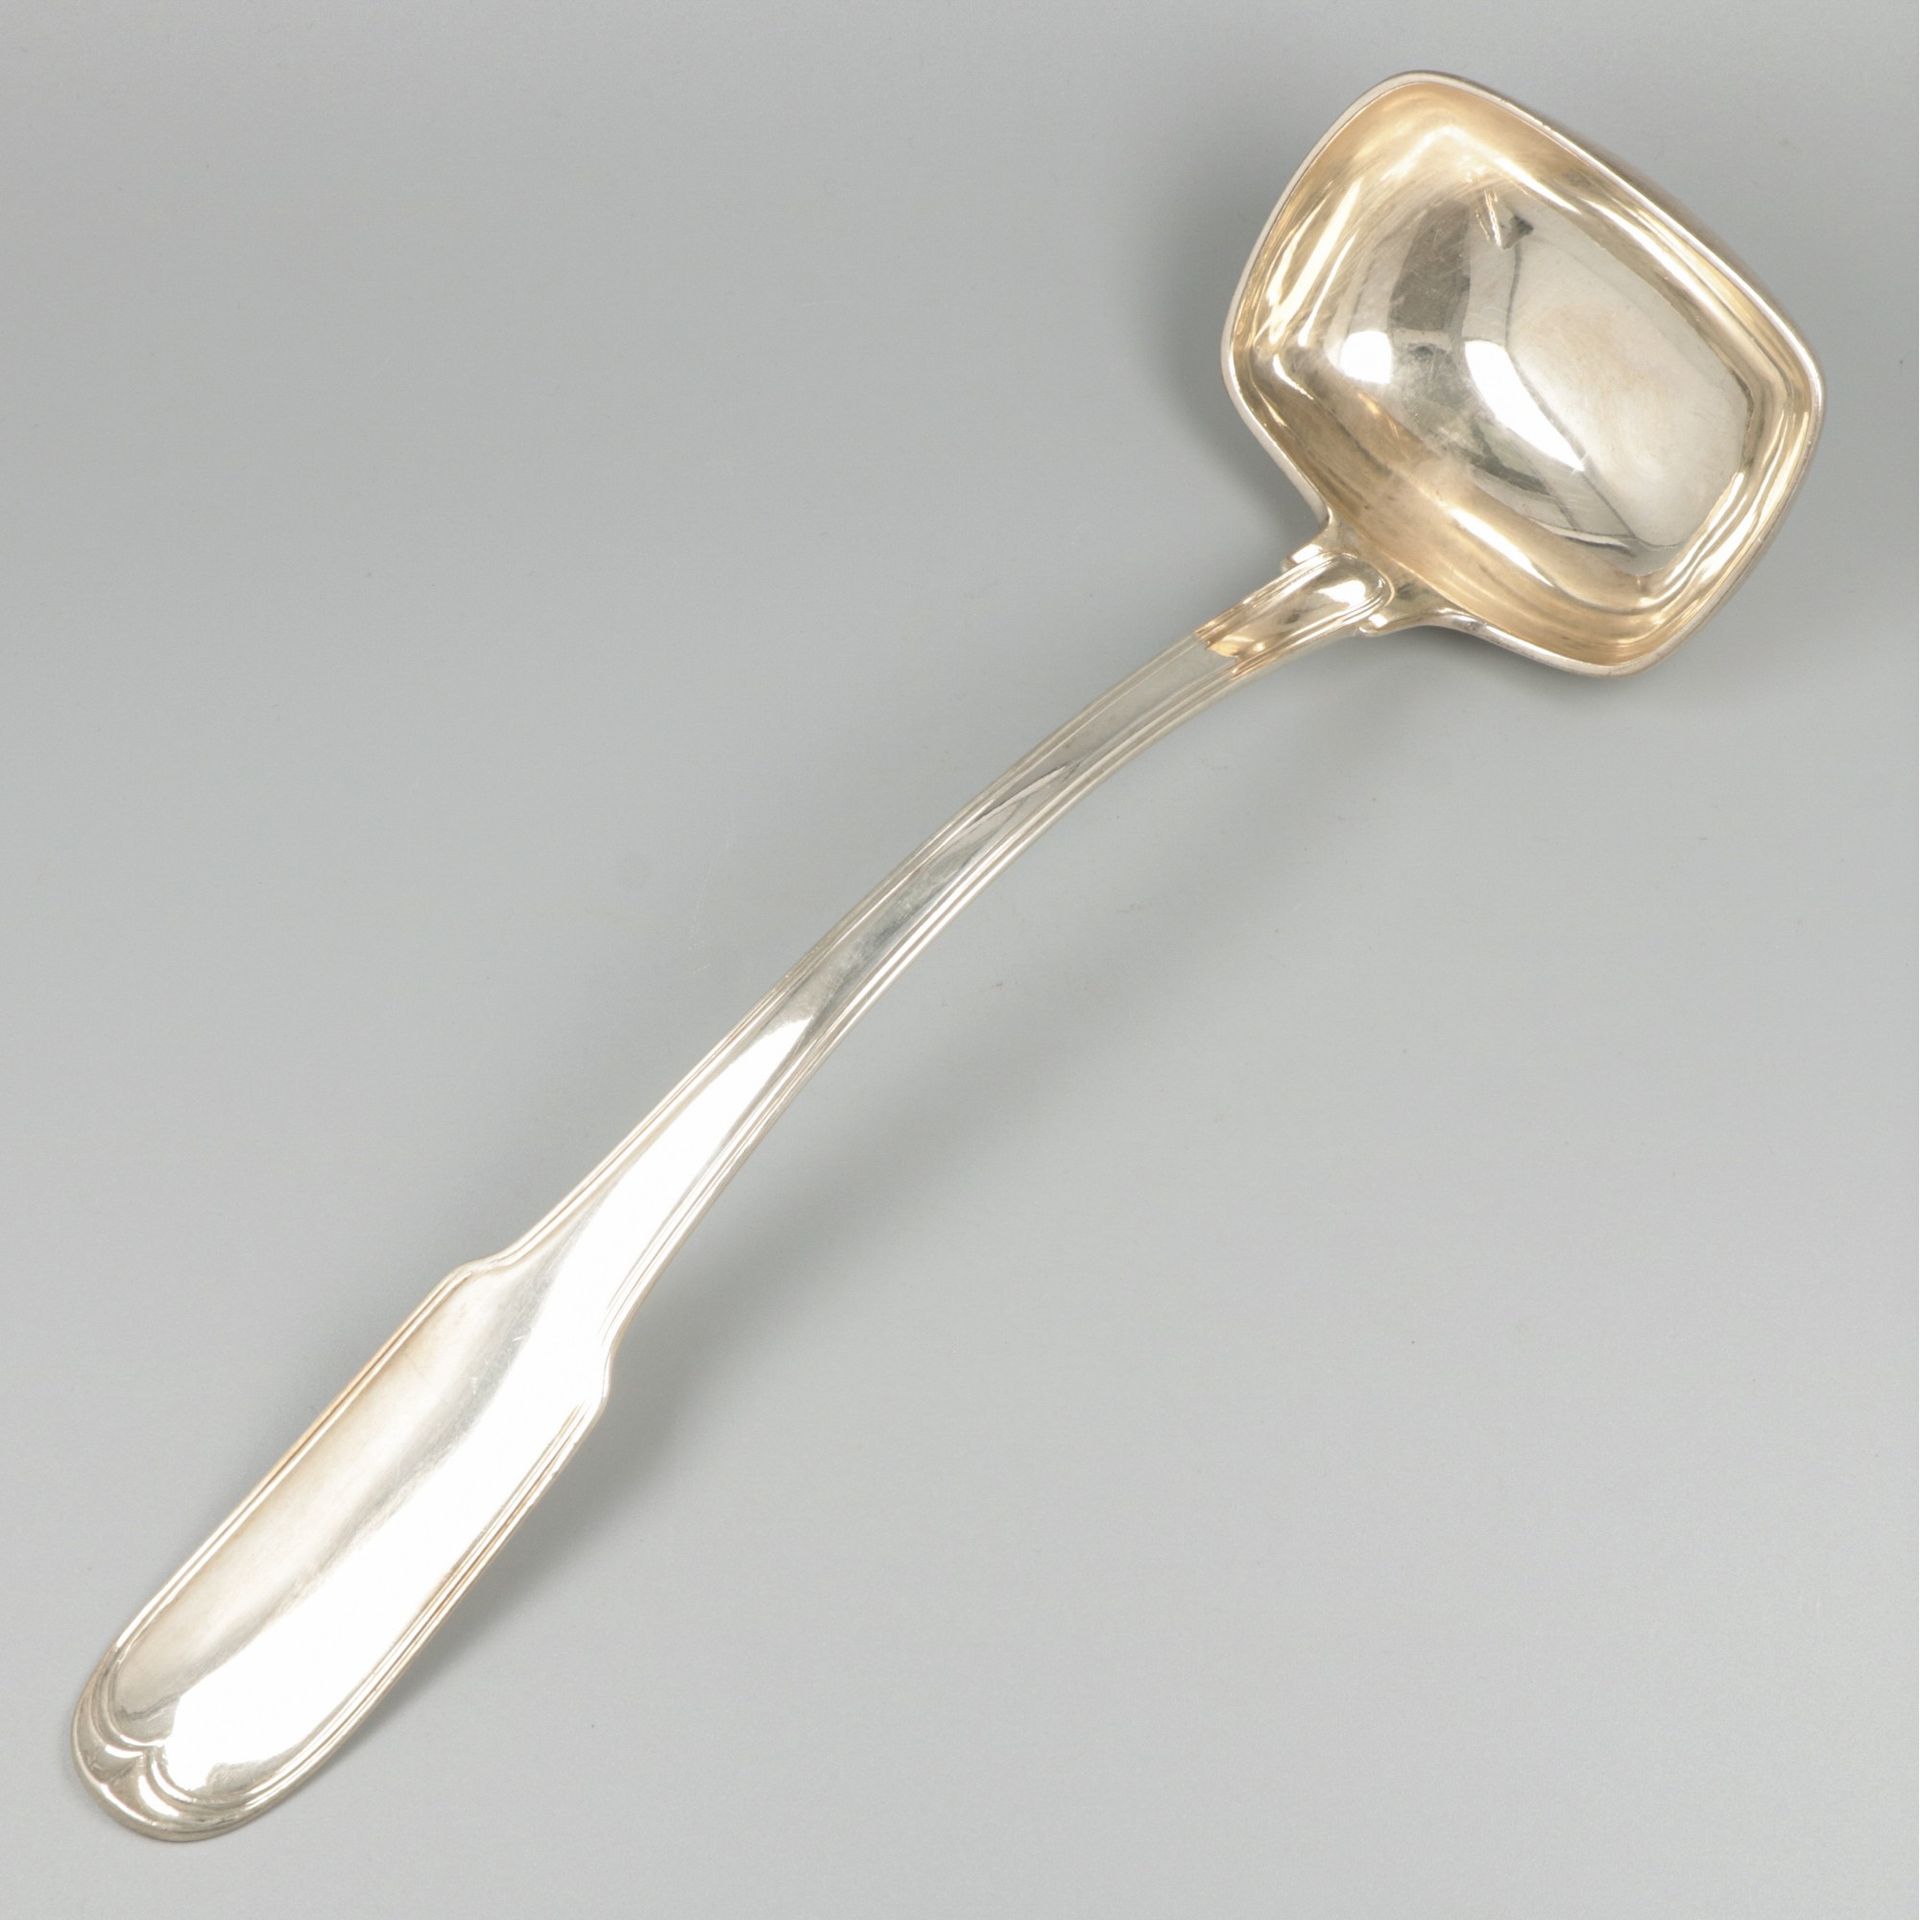 Soup ladle silver. Großes Modell mit rechteckiger Schale, "Hartfilet" oder Herzf&hellip;